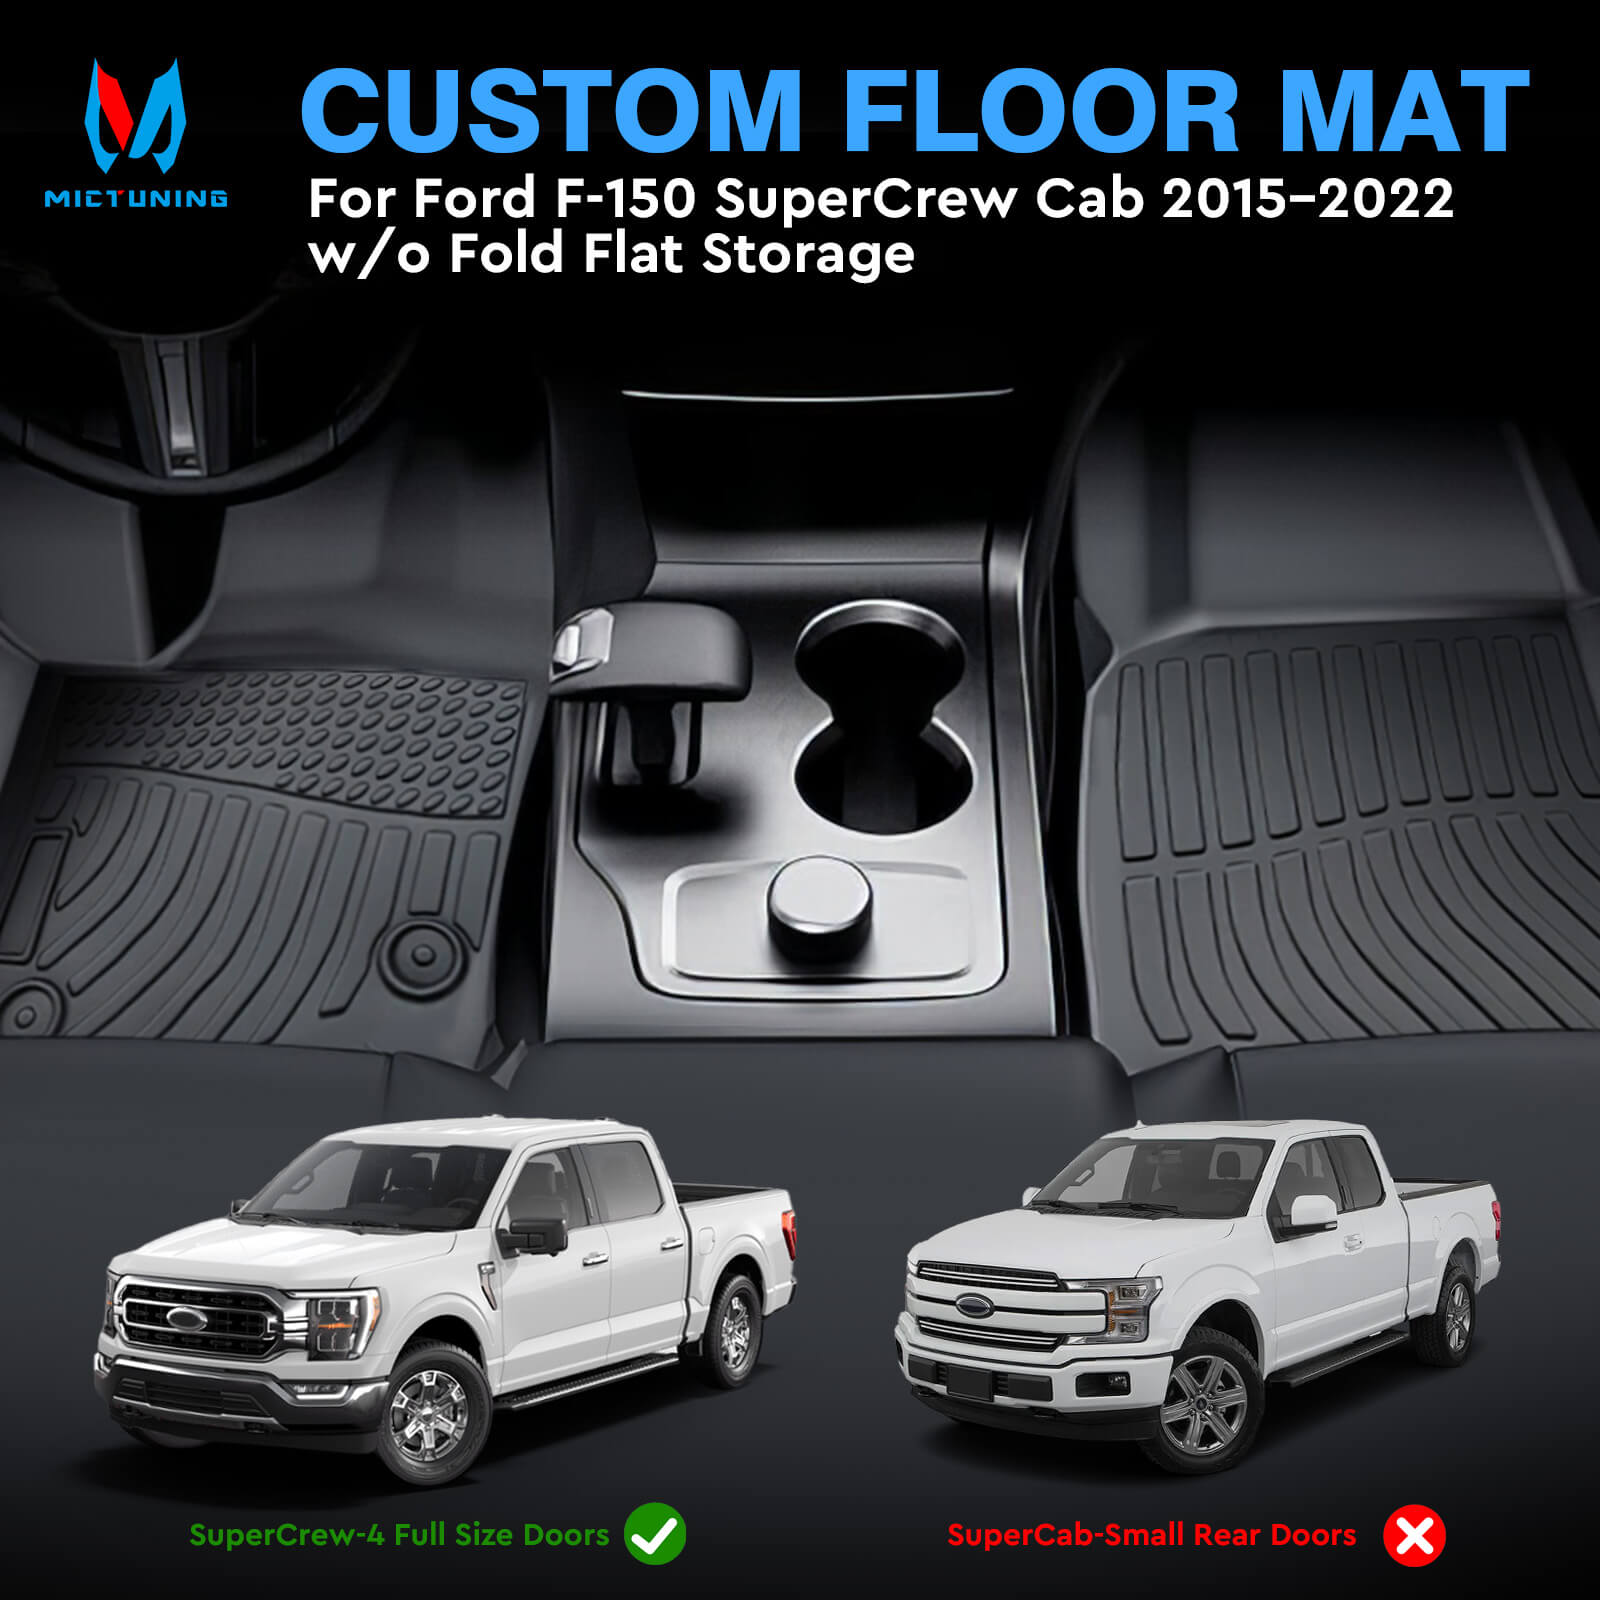 Ford F-150 SuperCrew Cab 2015-2022 Floor Mats, 1st & 2nd Row Liner Set Custom Fit